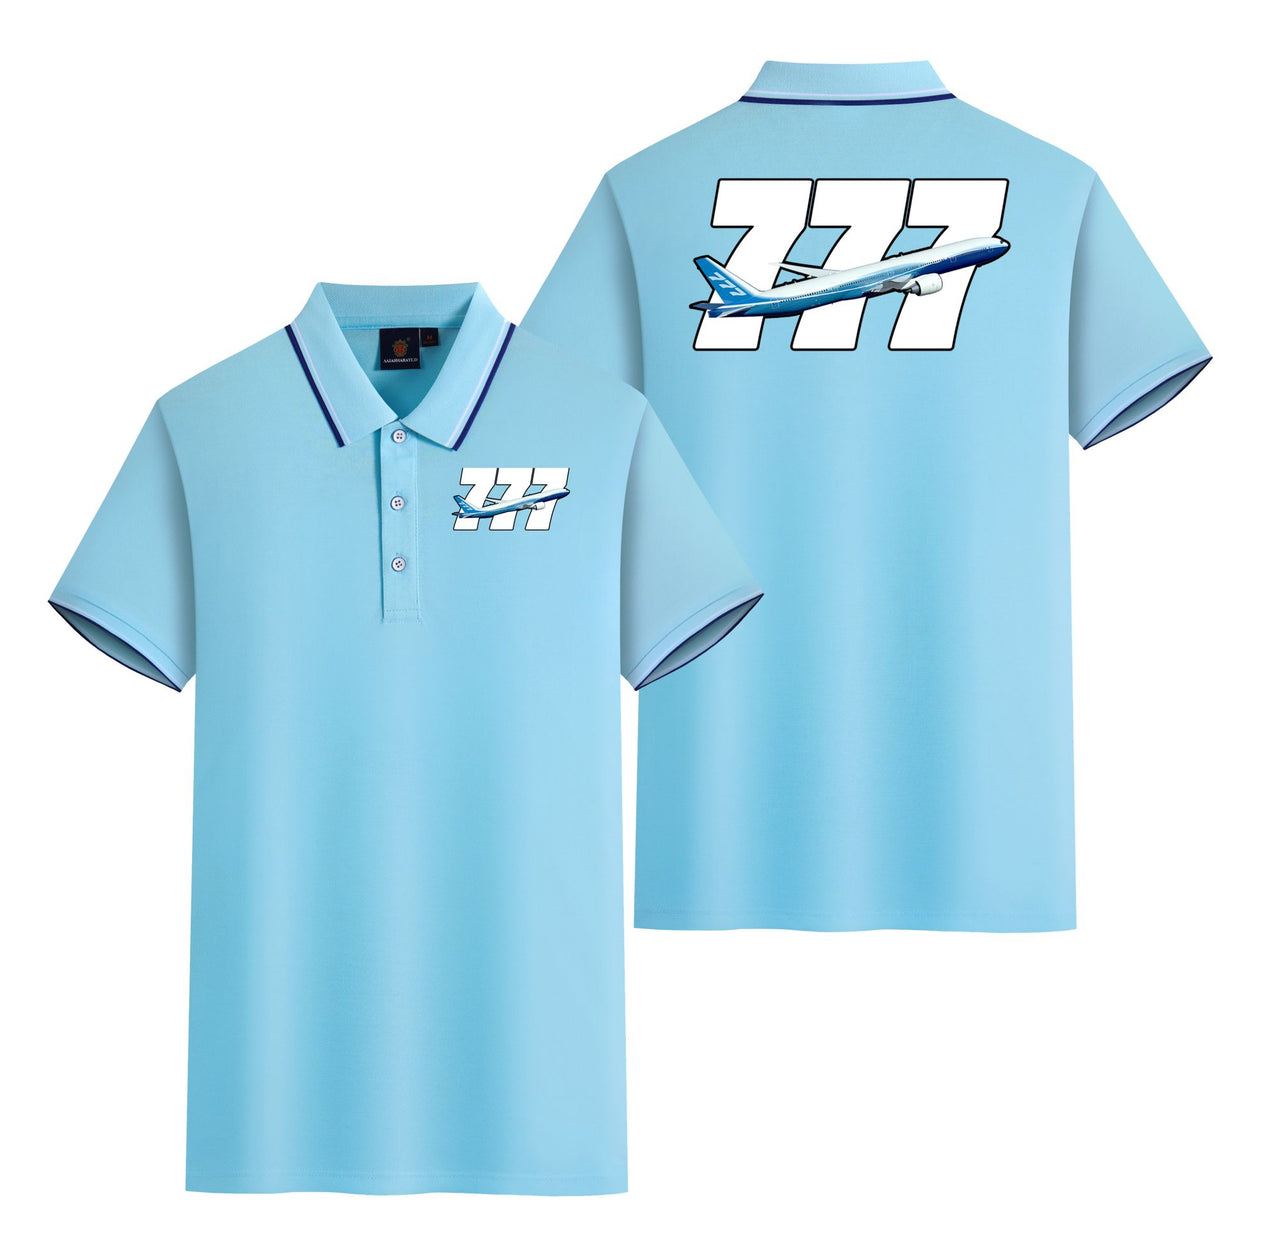 Super Boeing 777 Designed Stylish Polo T-Shirts (Double-Side)